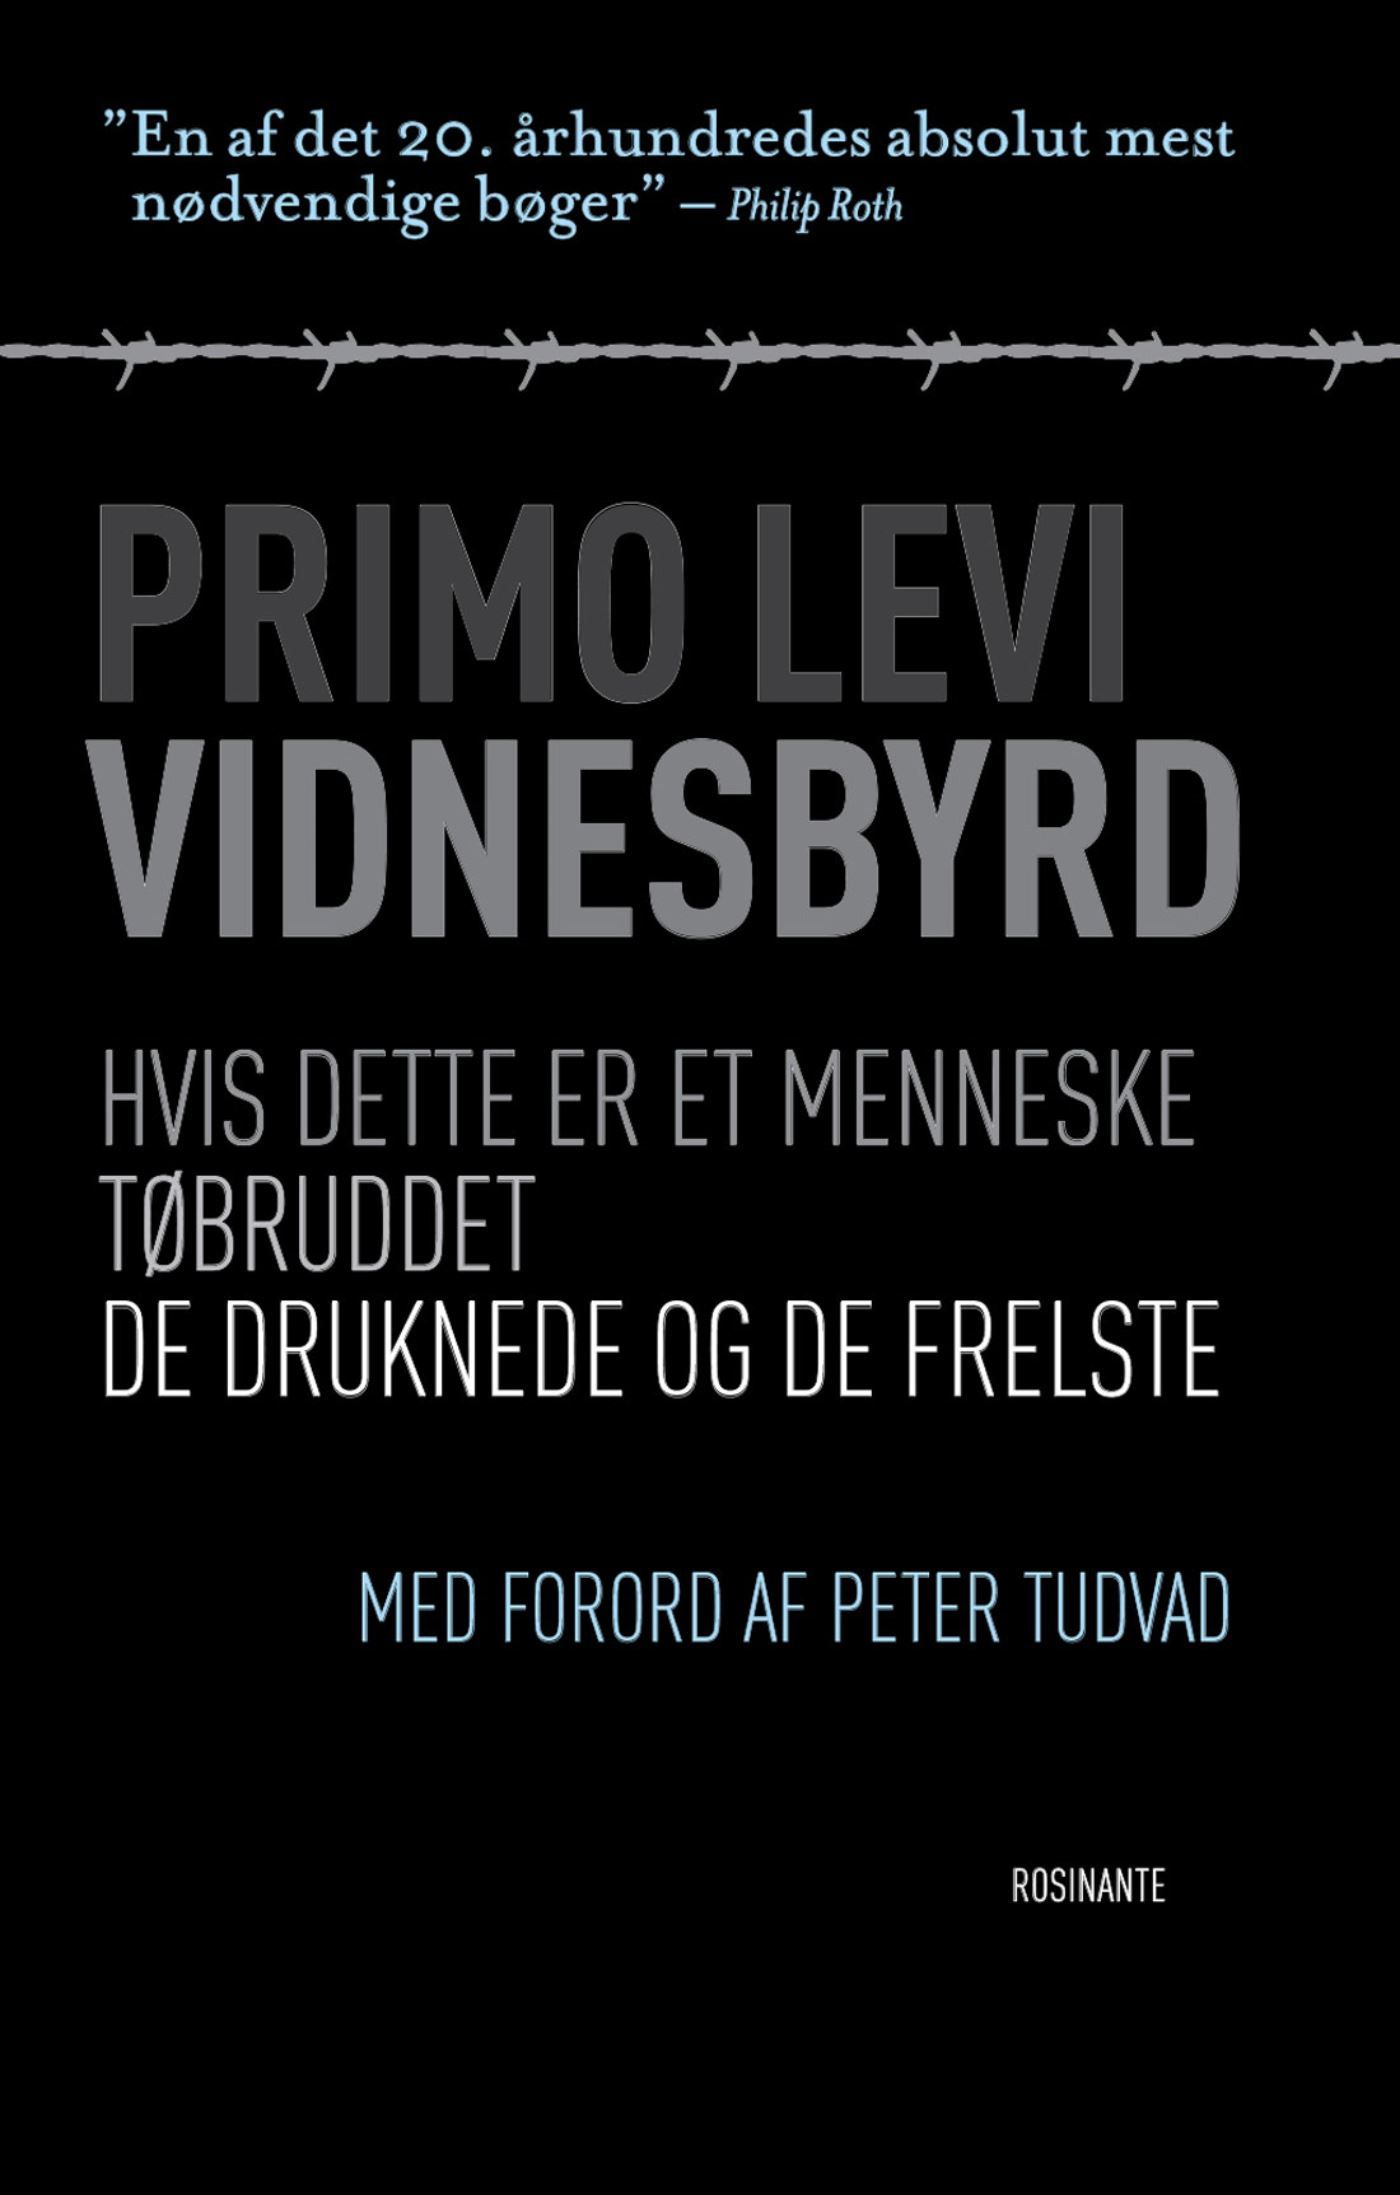 Vidnesbyrd, eBook by Primo Levi